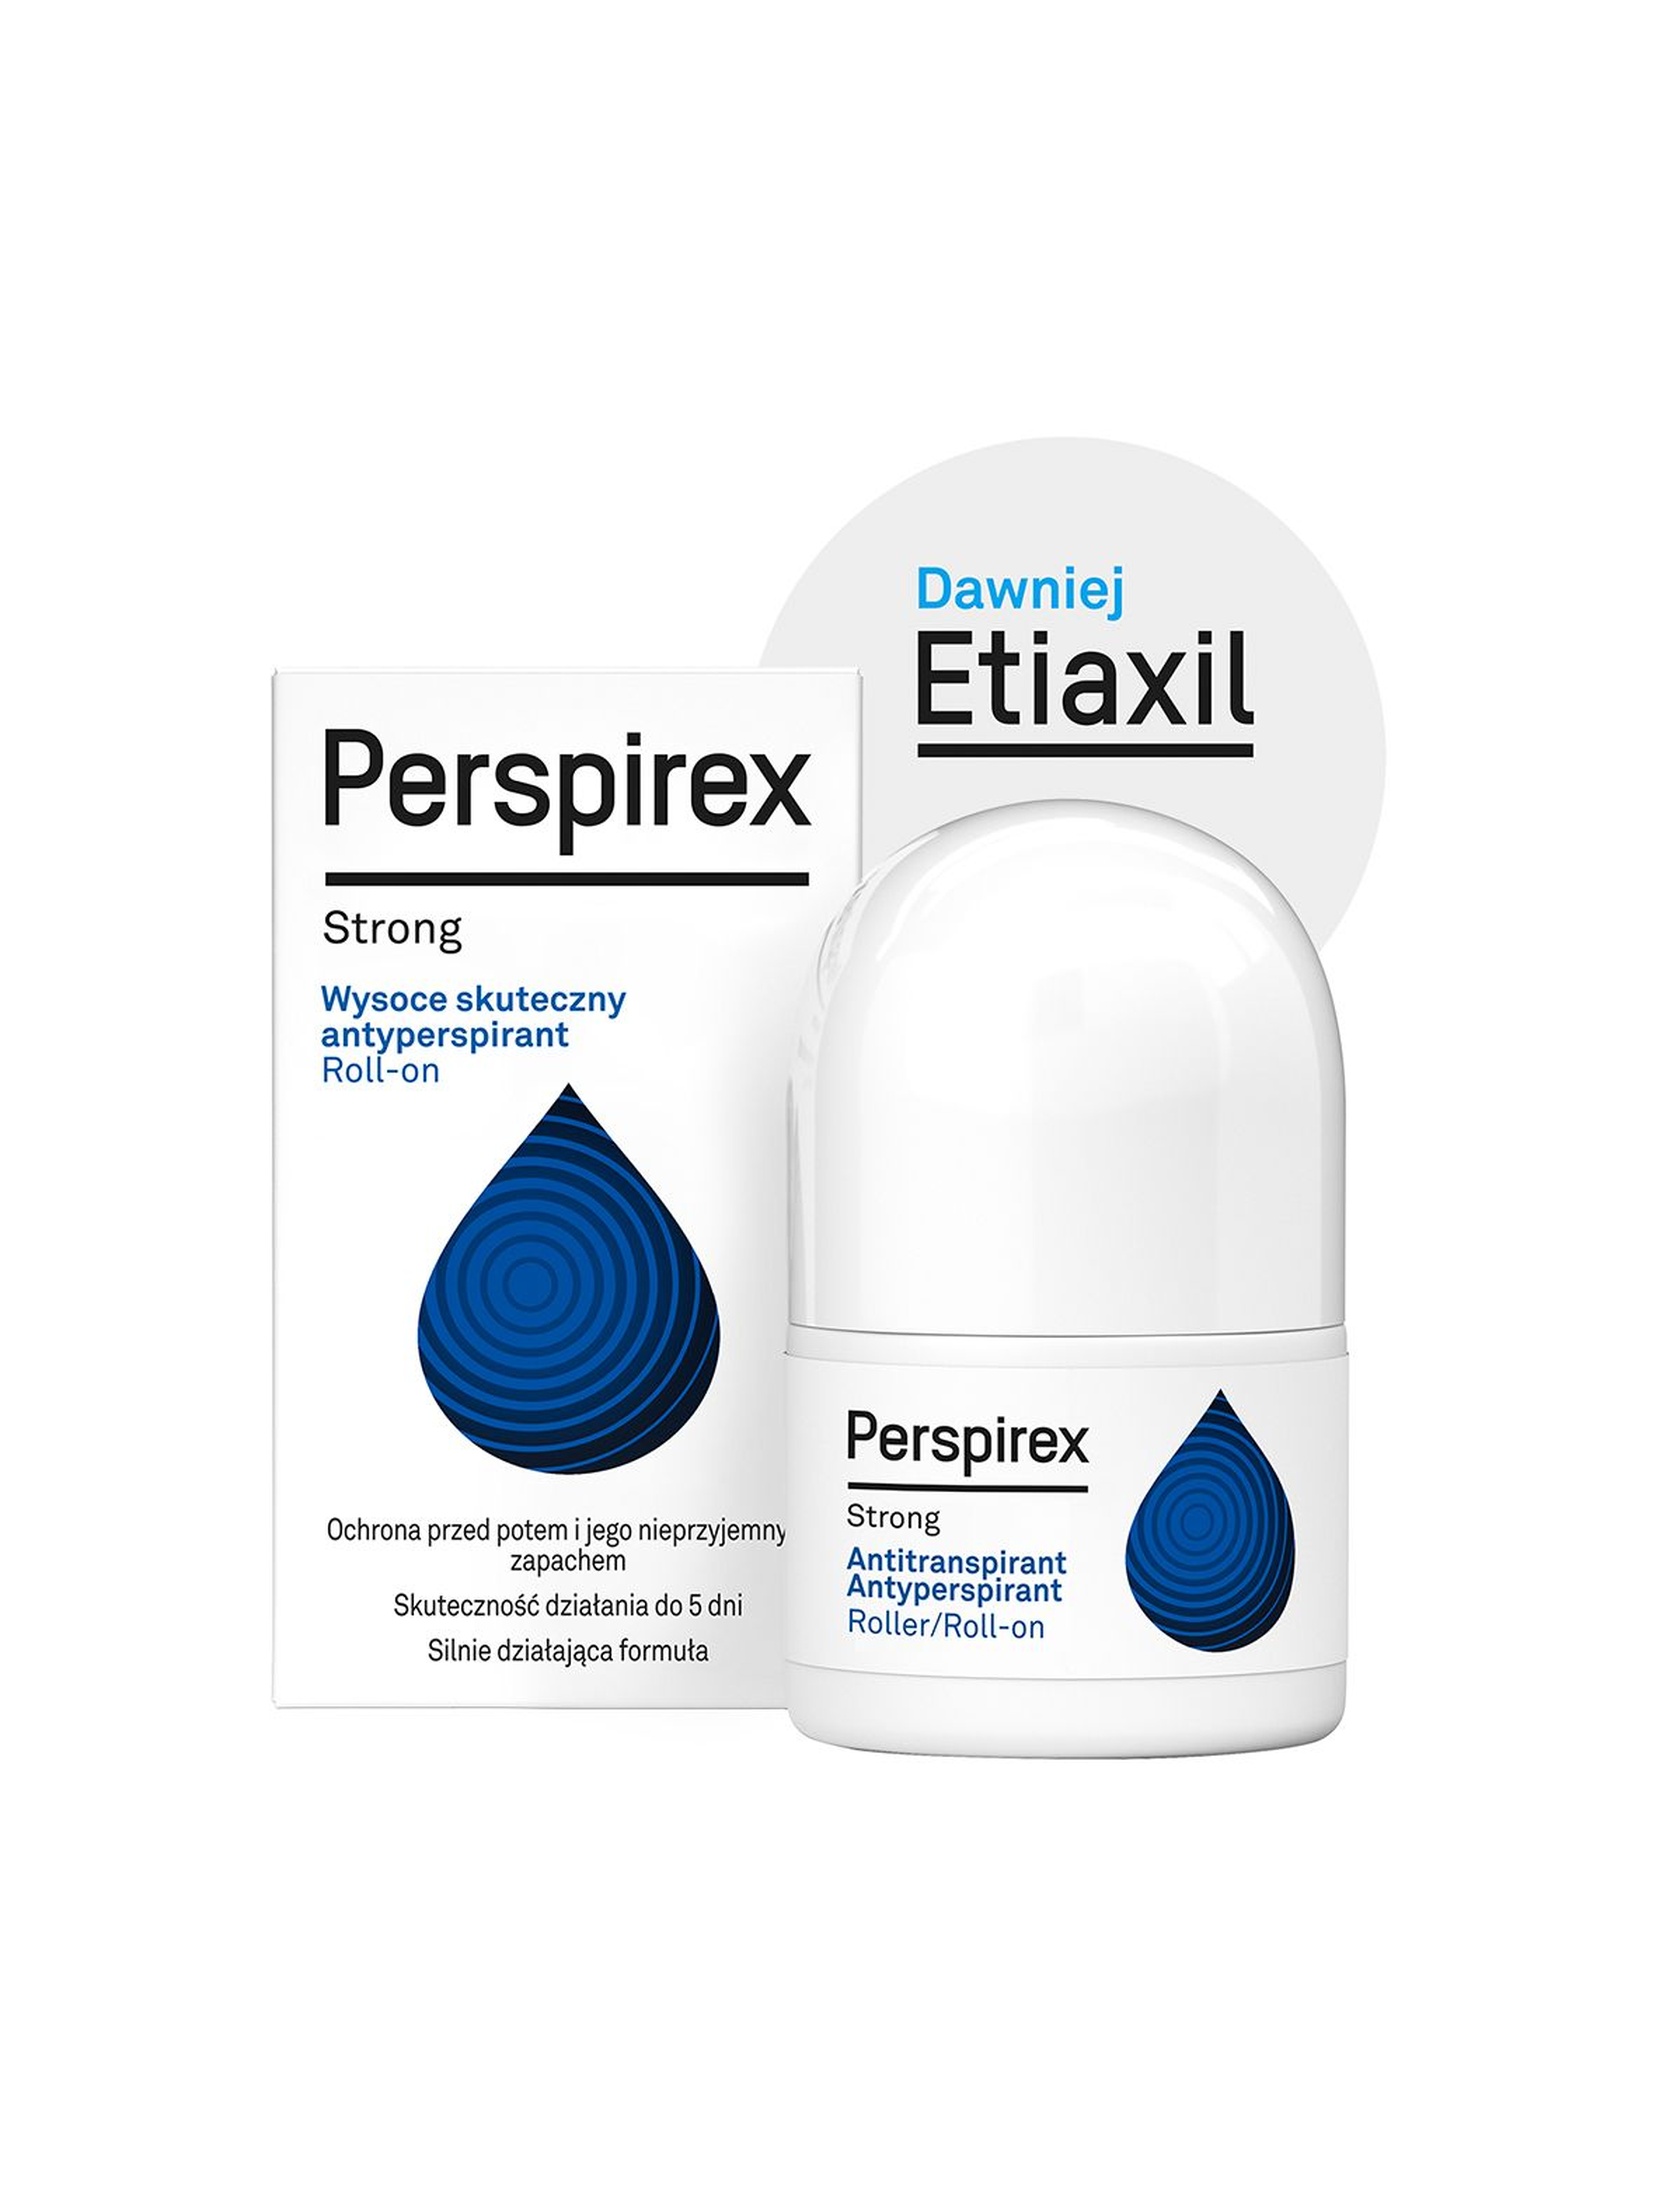 PERSPIREX Antyperspirant Strong 20ml